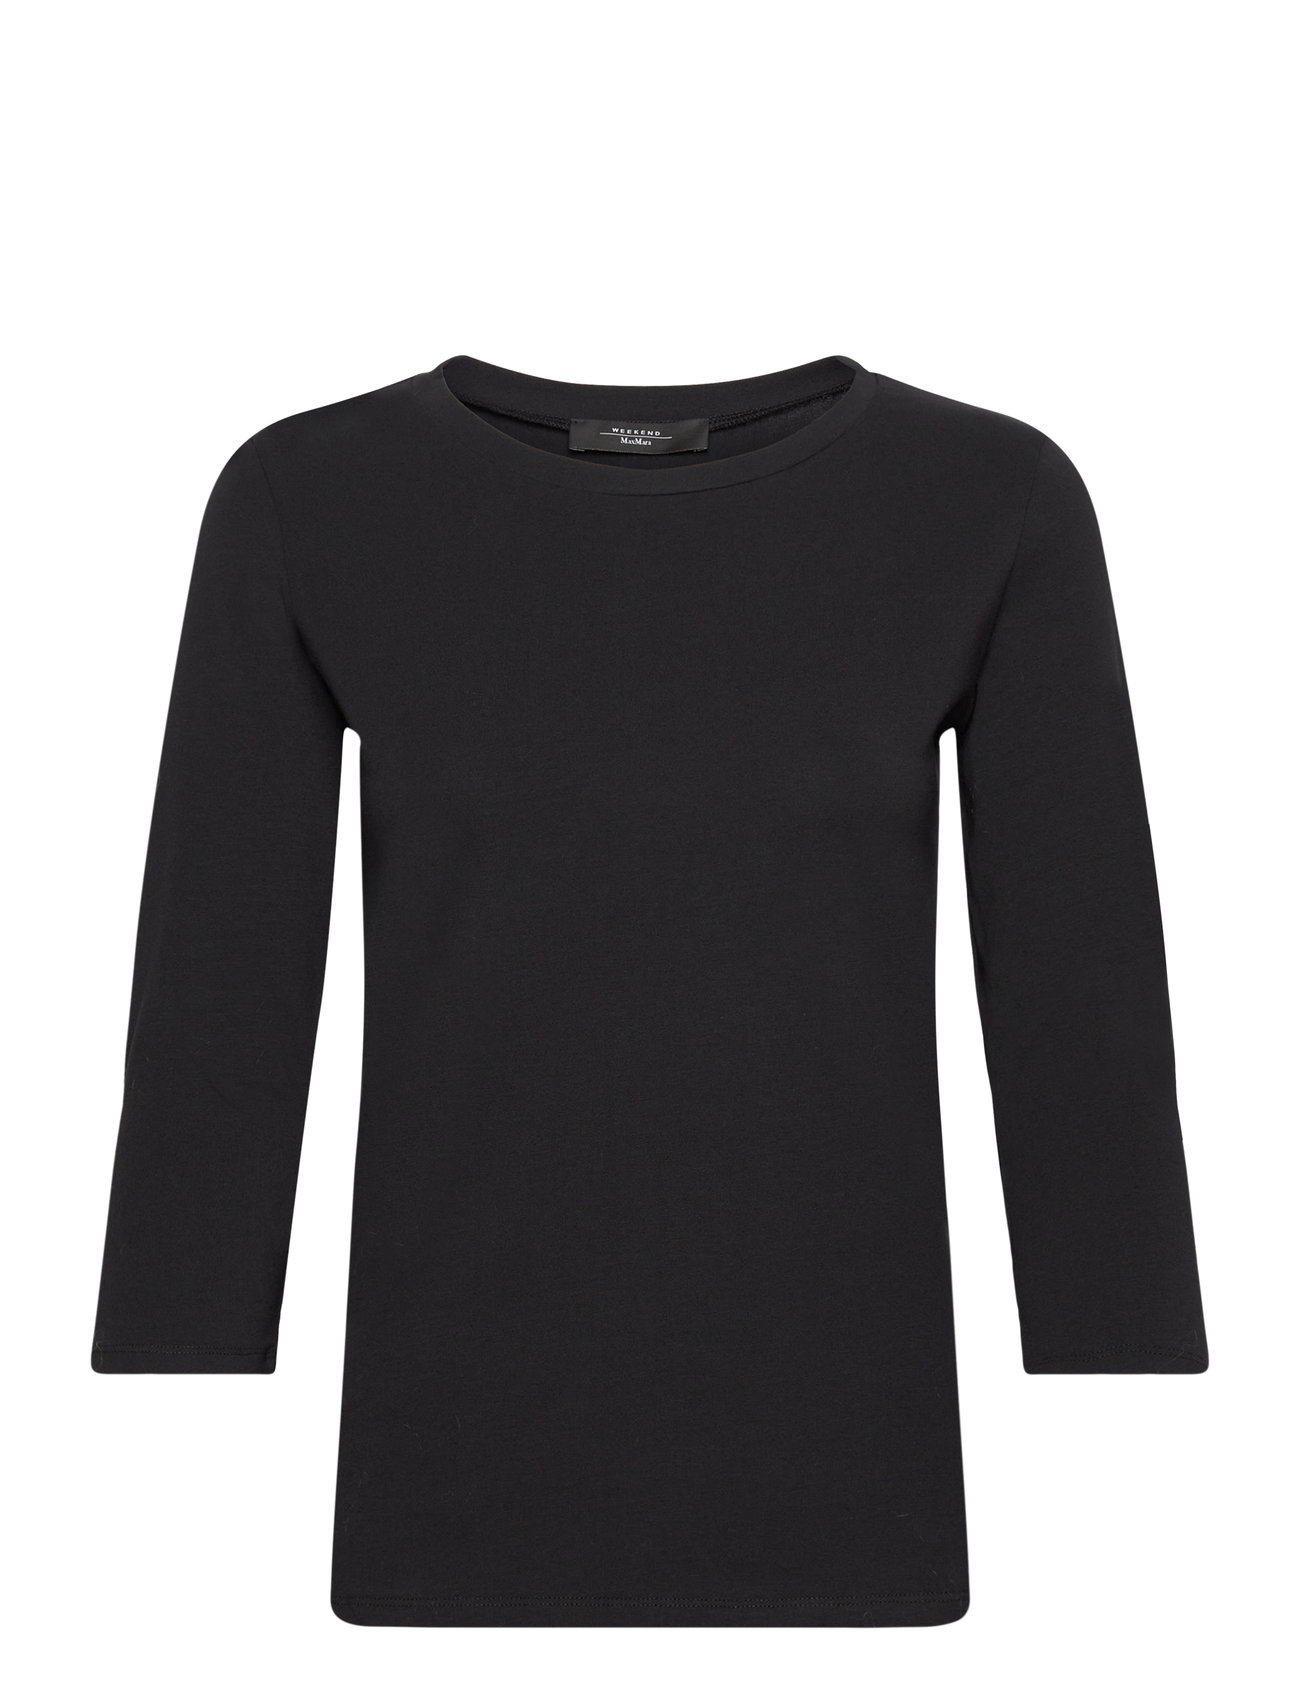 Multia Designers T-shirts & Tops Long-sleeved Black Weekend Max Mara